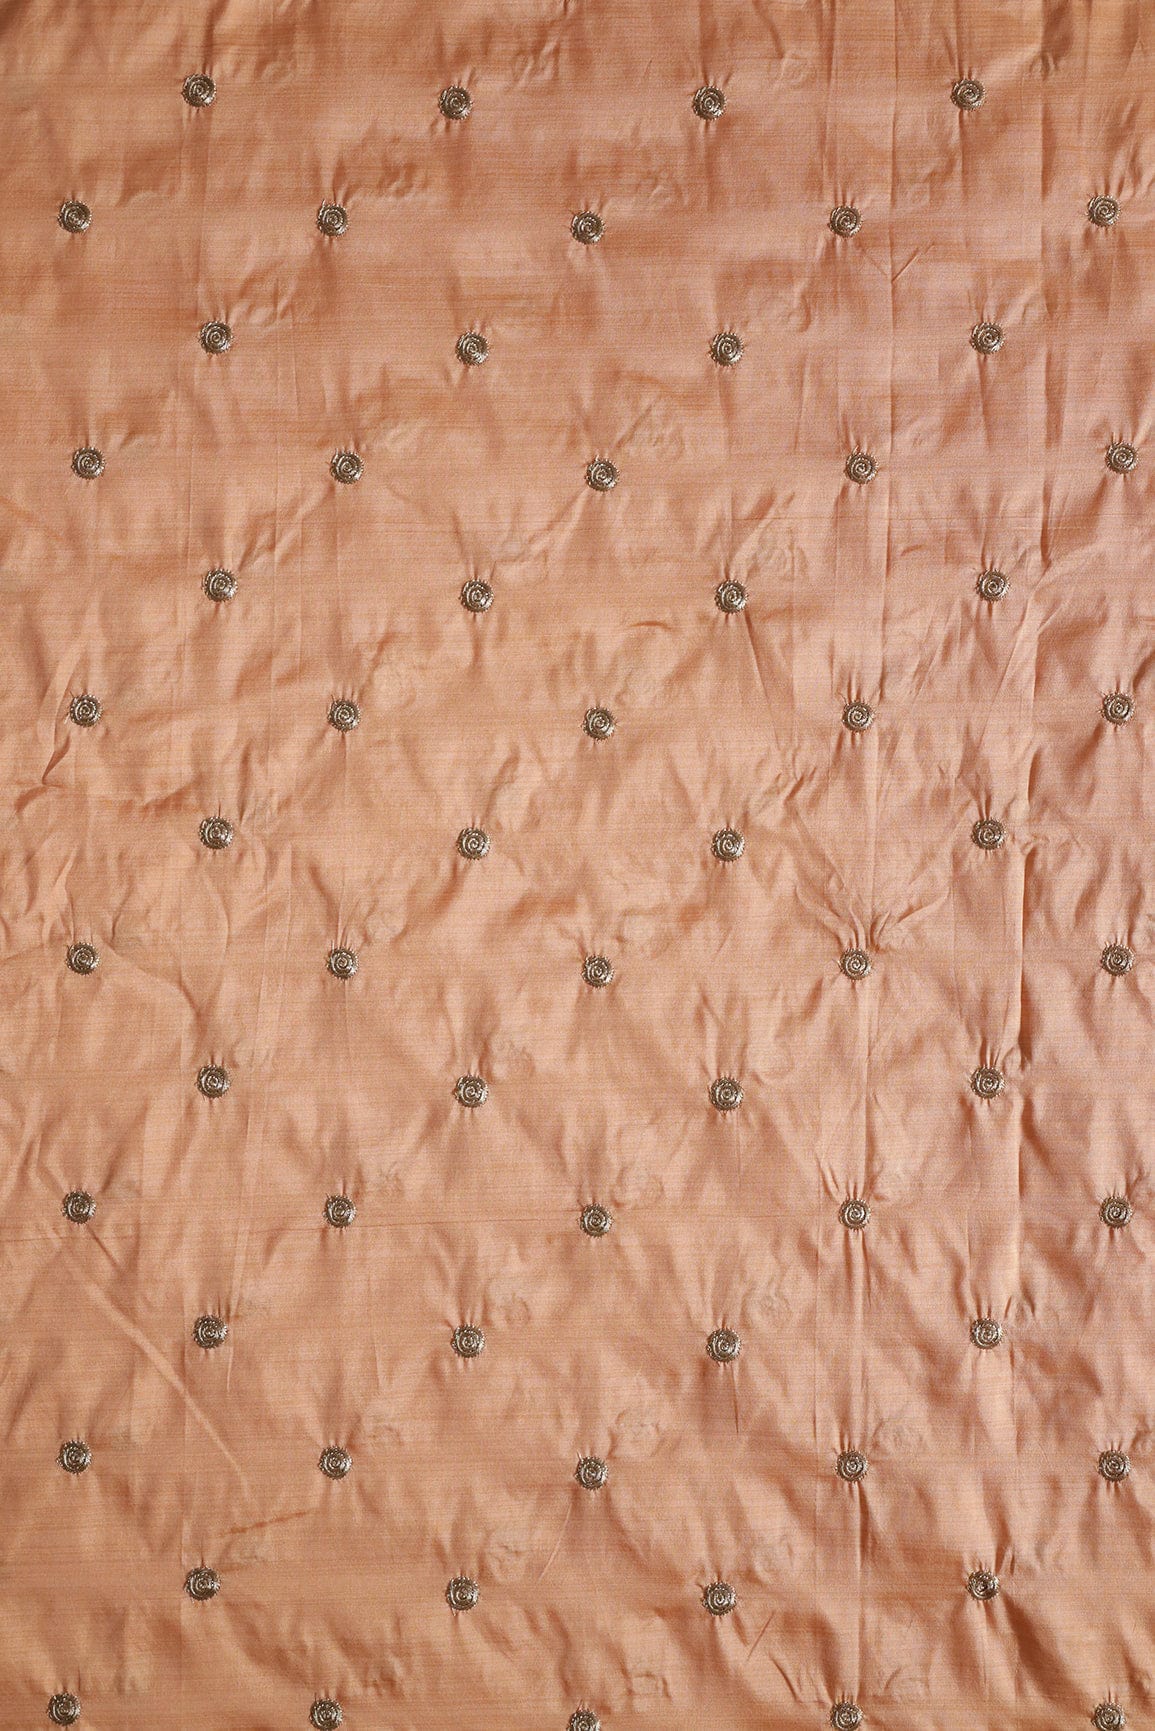 doeraa Embroidery Fabrics Gold Zari Small Motif Embroidery Work On Peach Bamboo Silk Fabric